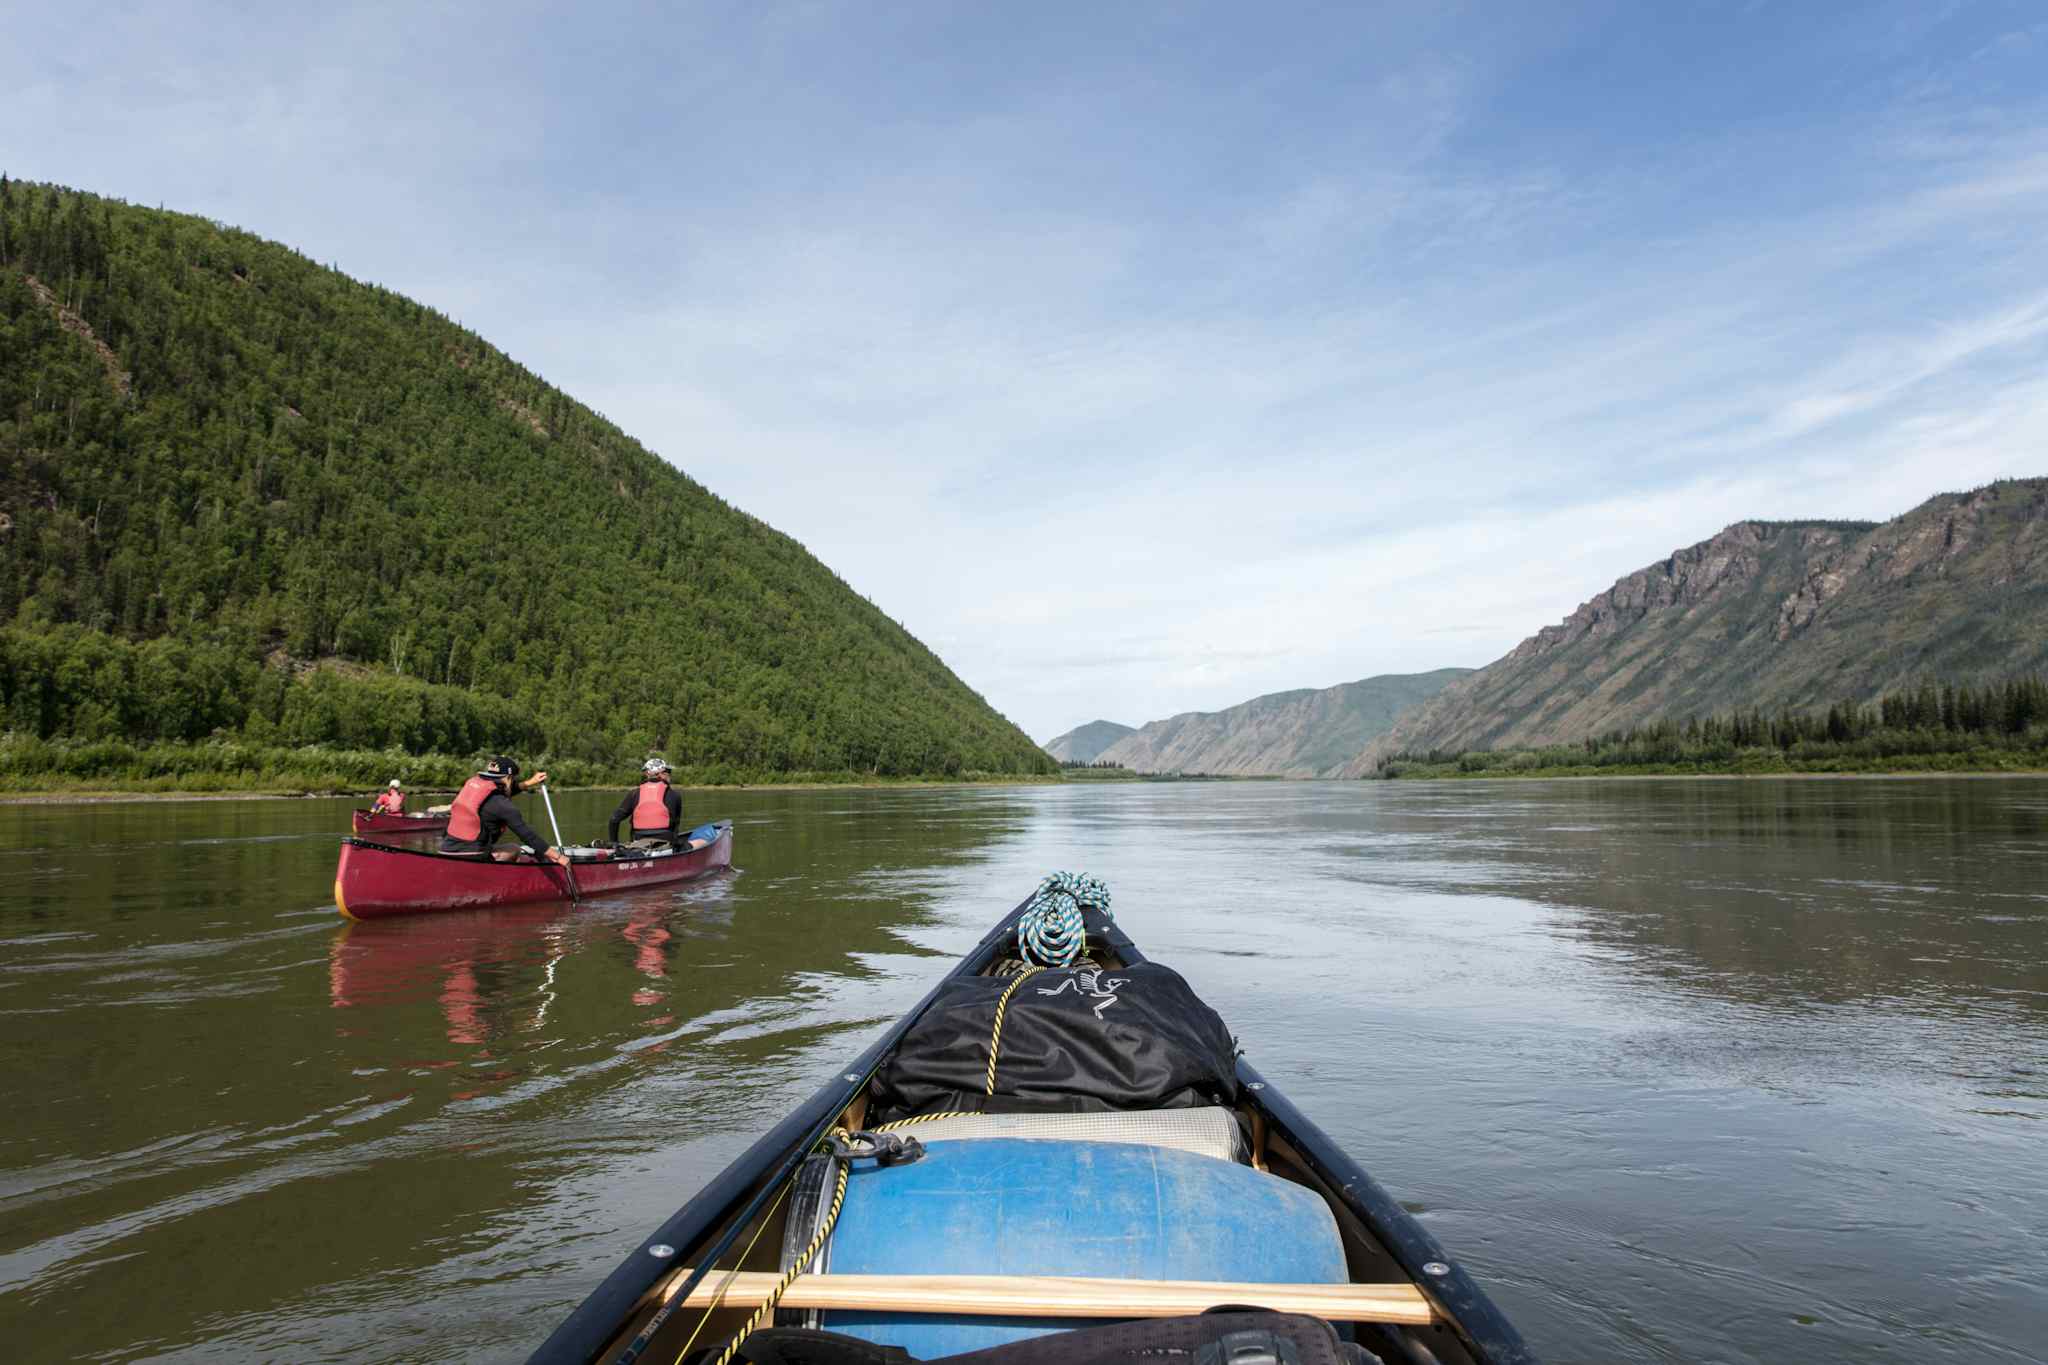 Yukon River, Canada
Host image: Ruby Range Adventures